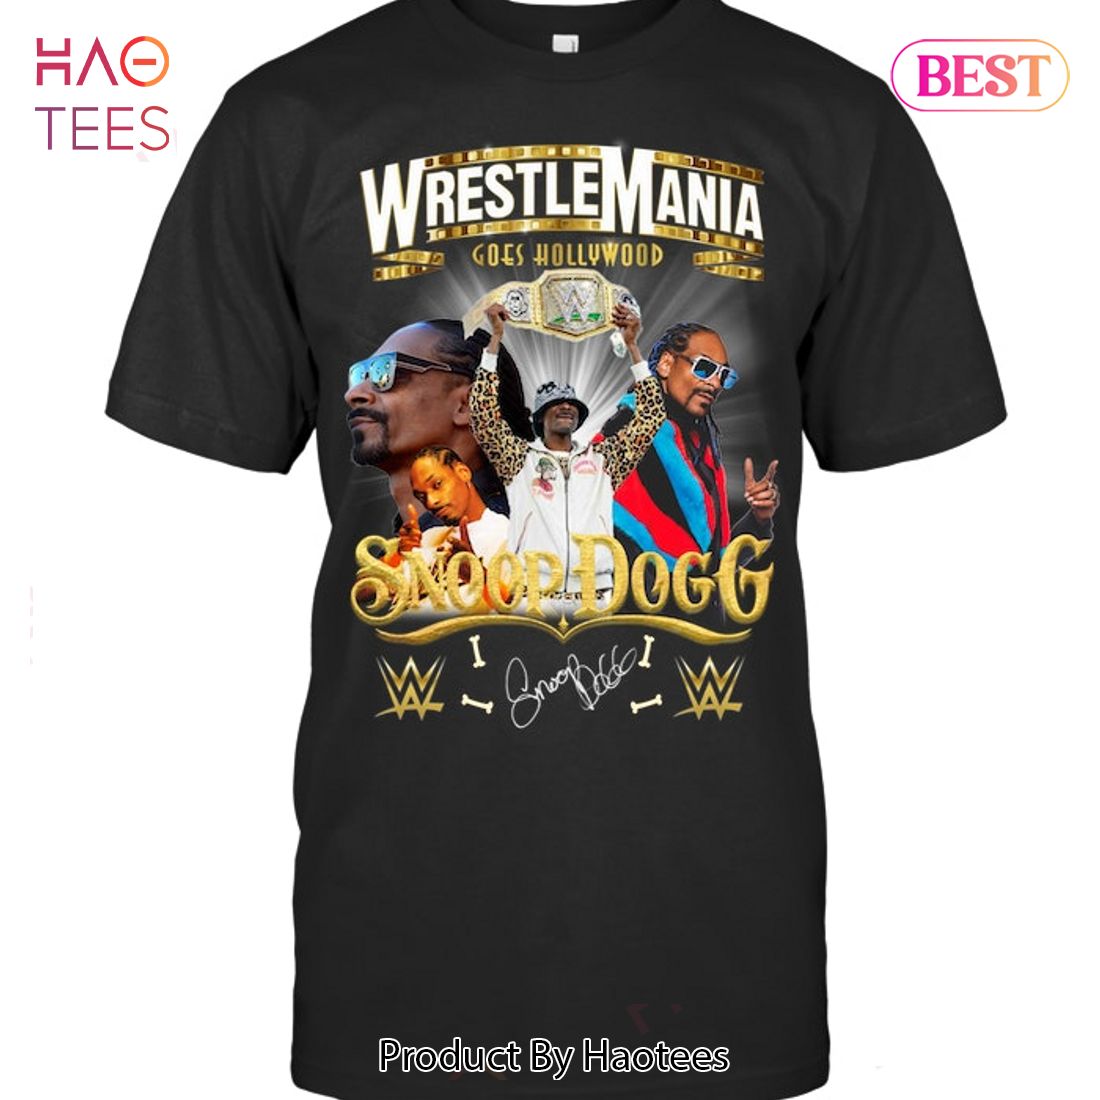 NEW WrestleMania Gose Hollywood Snoop Dogg T-Shirt